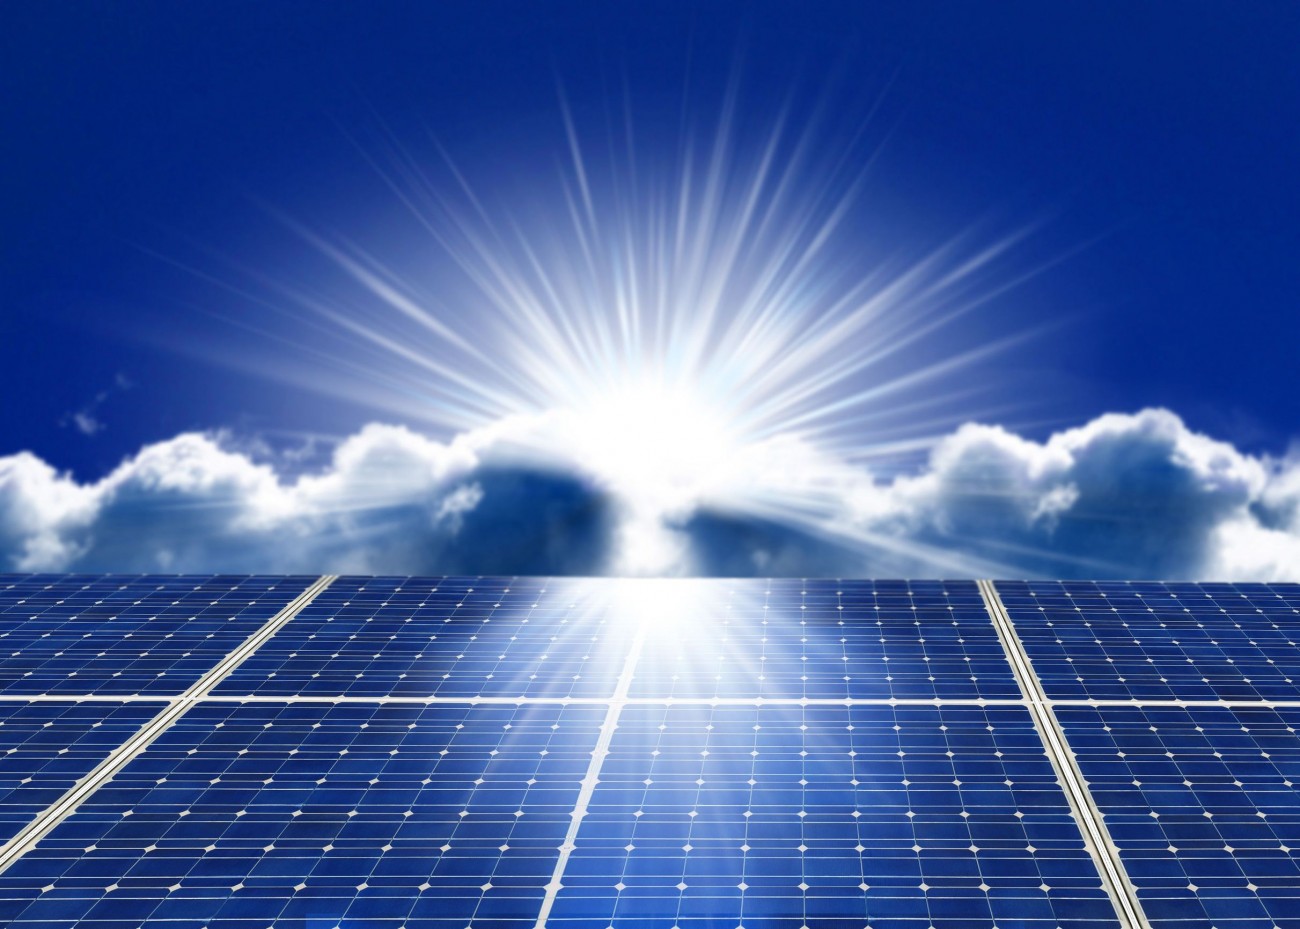 Solar Power Project